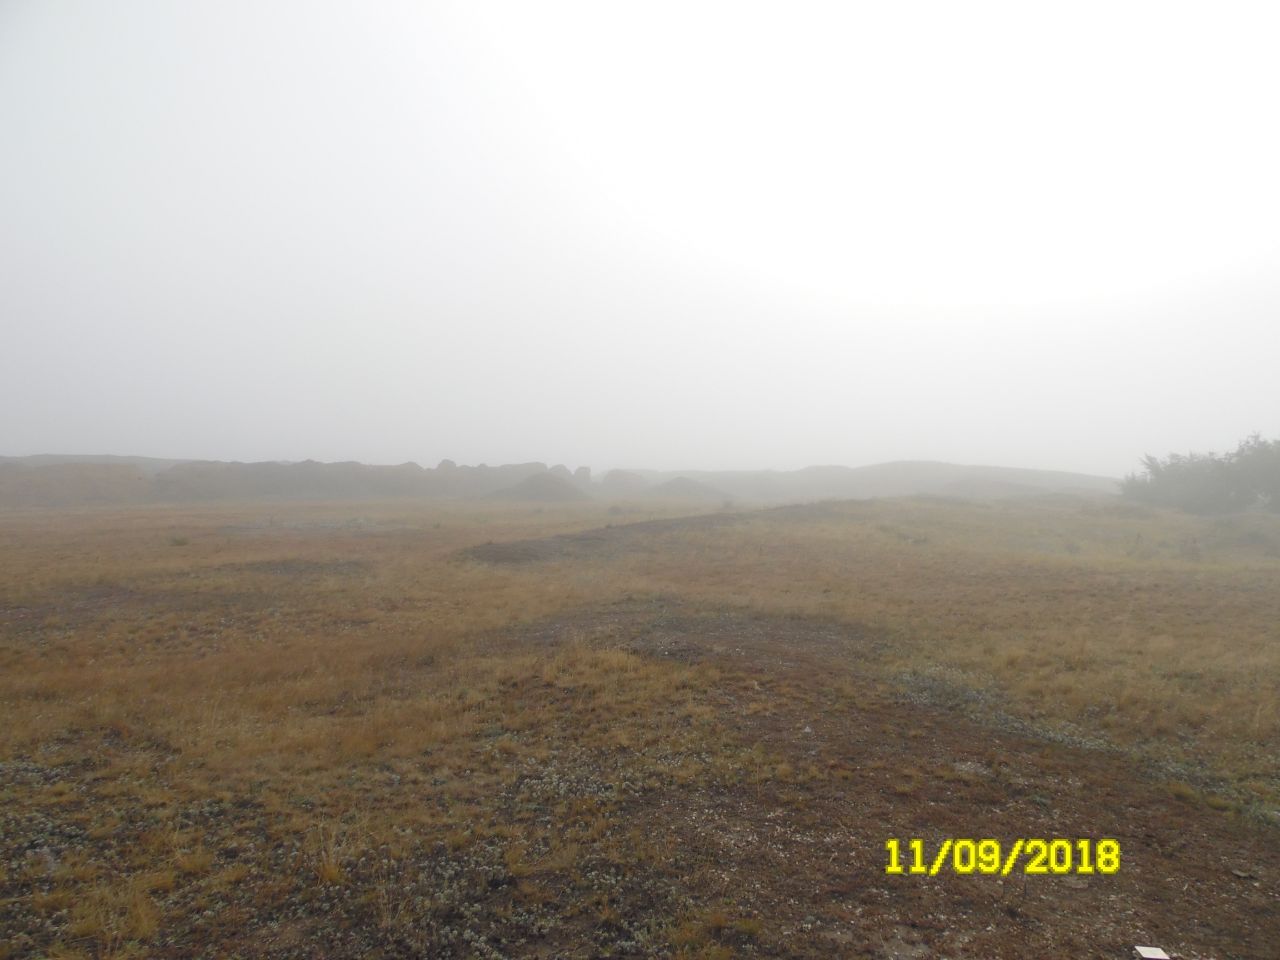 а потом пошёл туман - Аркаим, сентябрь 18.